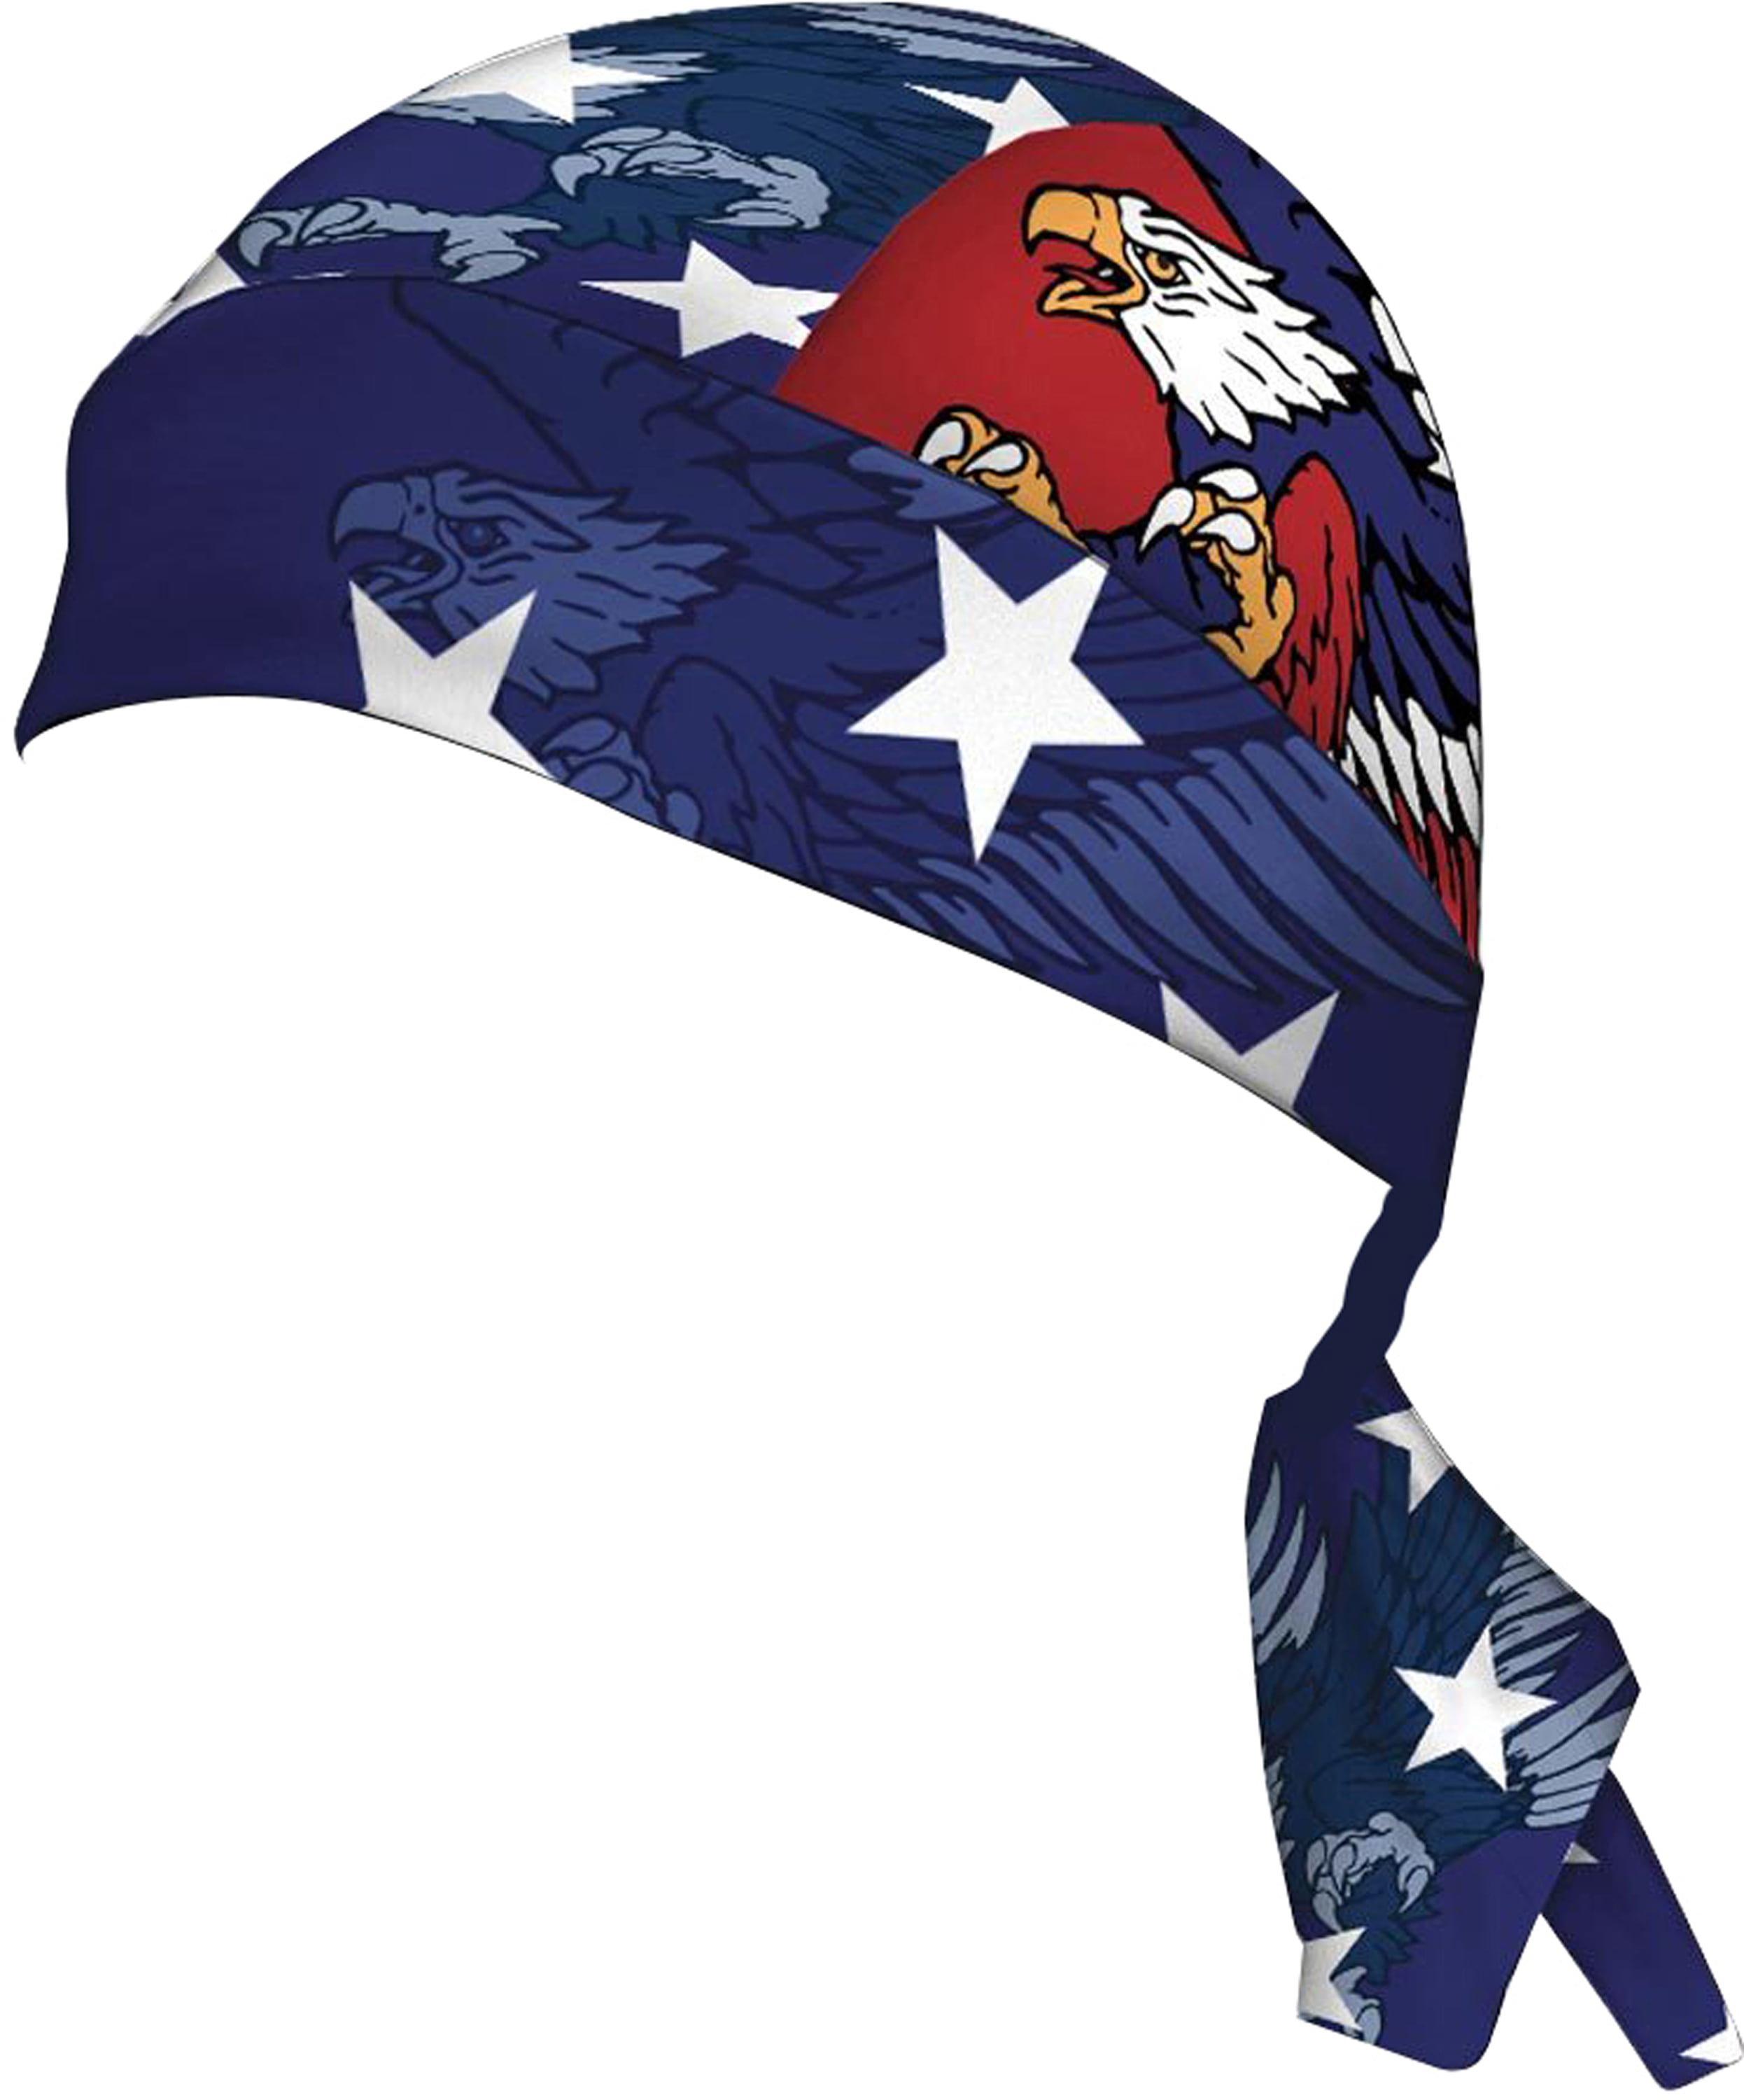 2 Two Flag Headband Festival Sweatband Unisex Stars Stripes Red White Blue USA